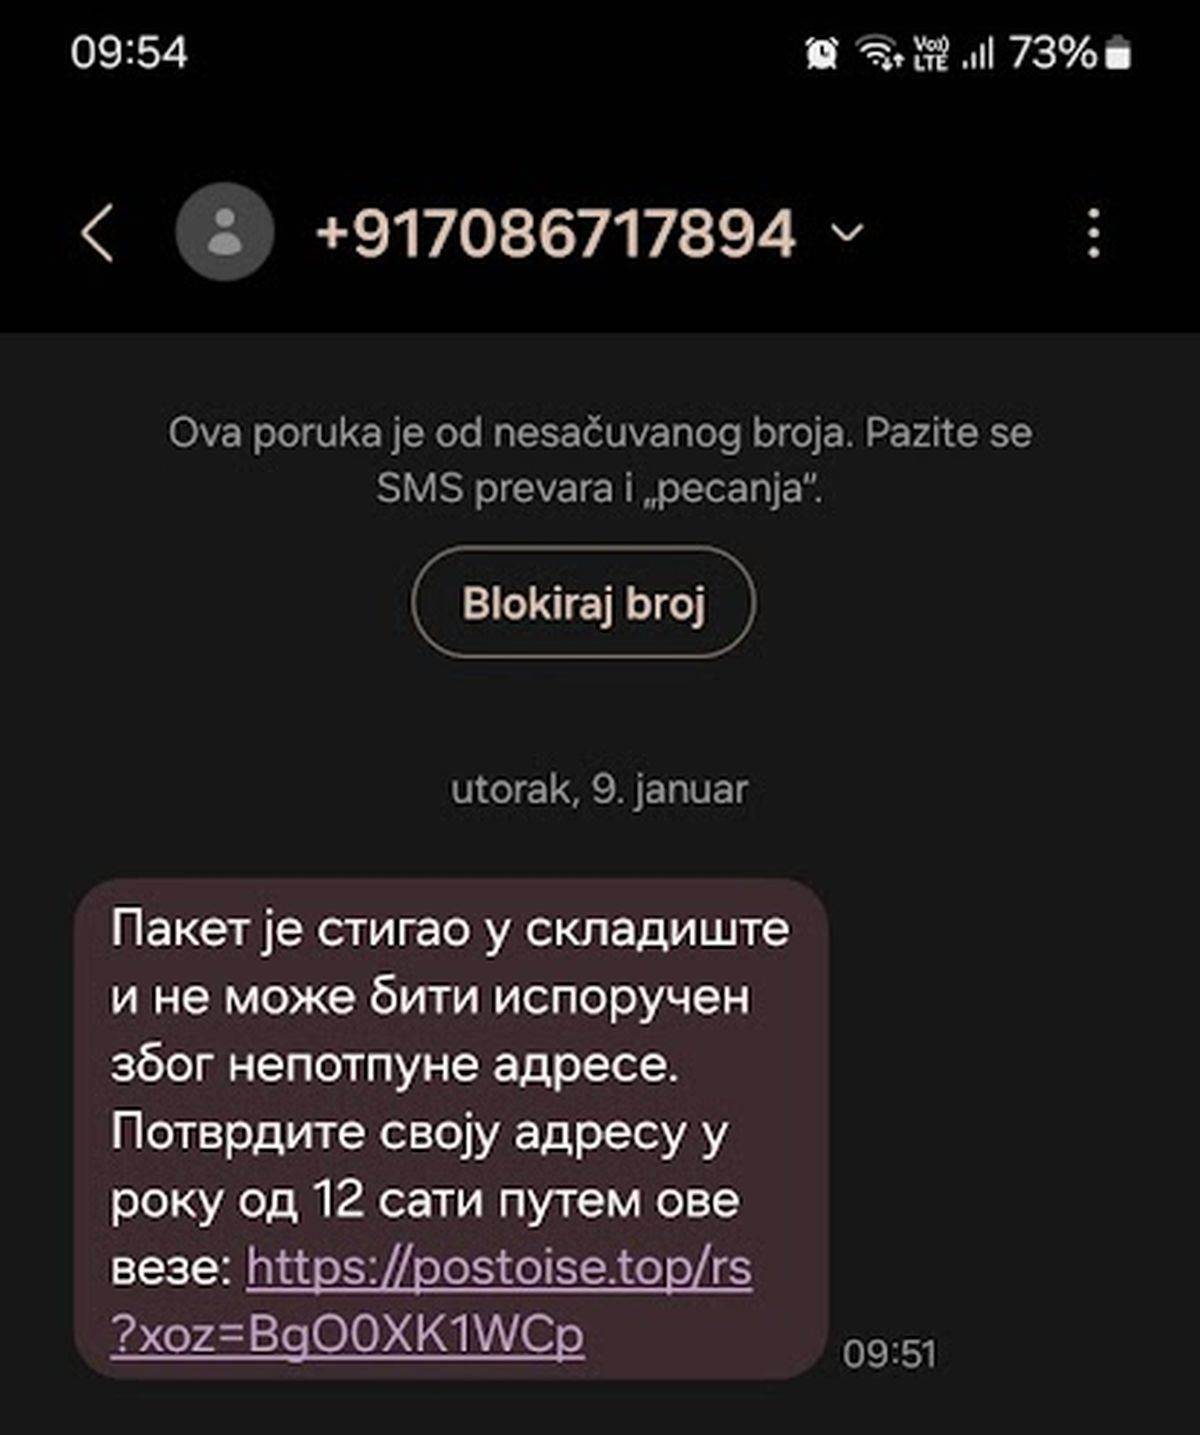  SMS prevara 2 _ Izvor SmartLife.jpg 